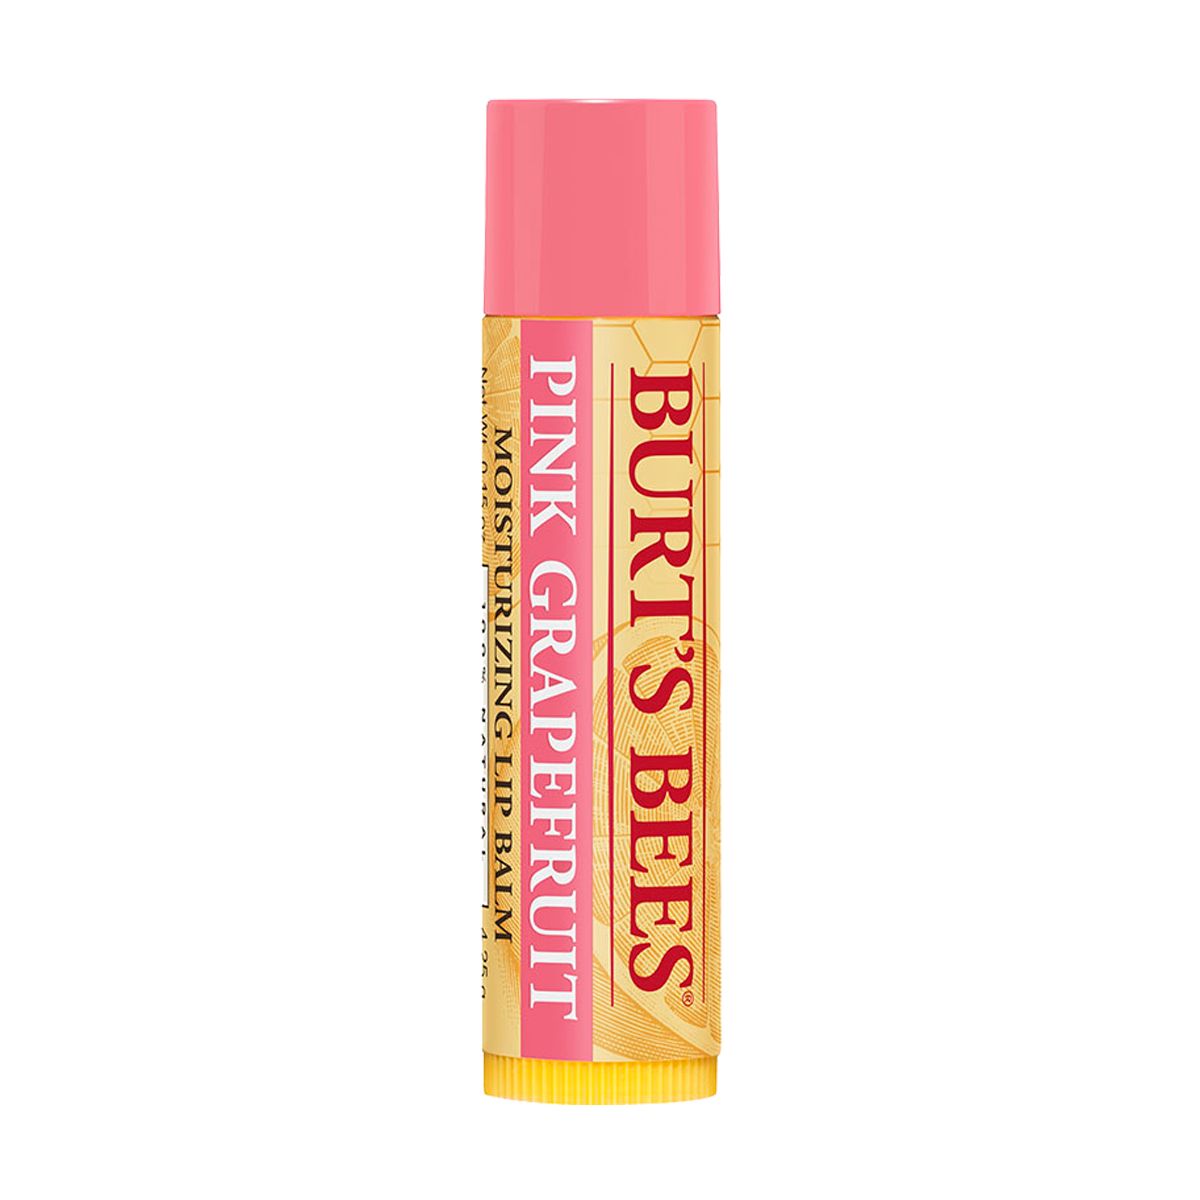 Image of Burt’s Bees 100% Natural Moisturizing Lip Balm Pink Grapefruit - 1 Tube